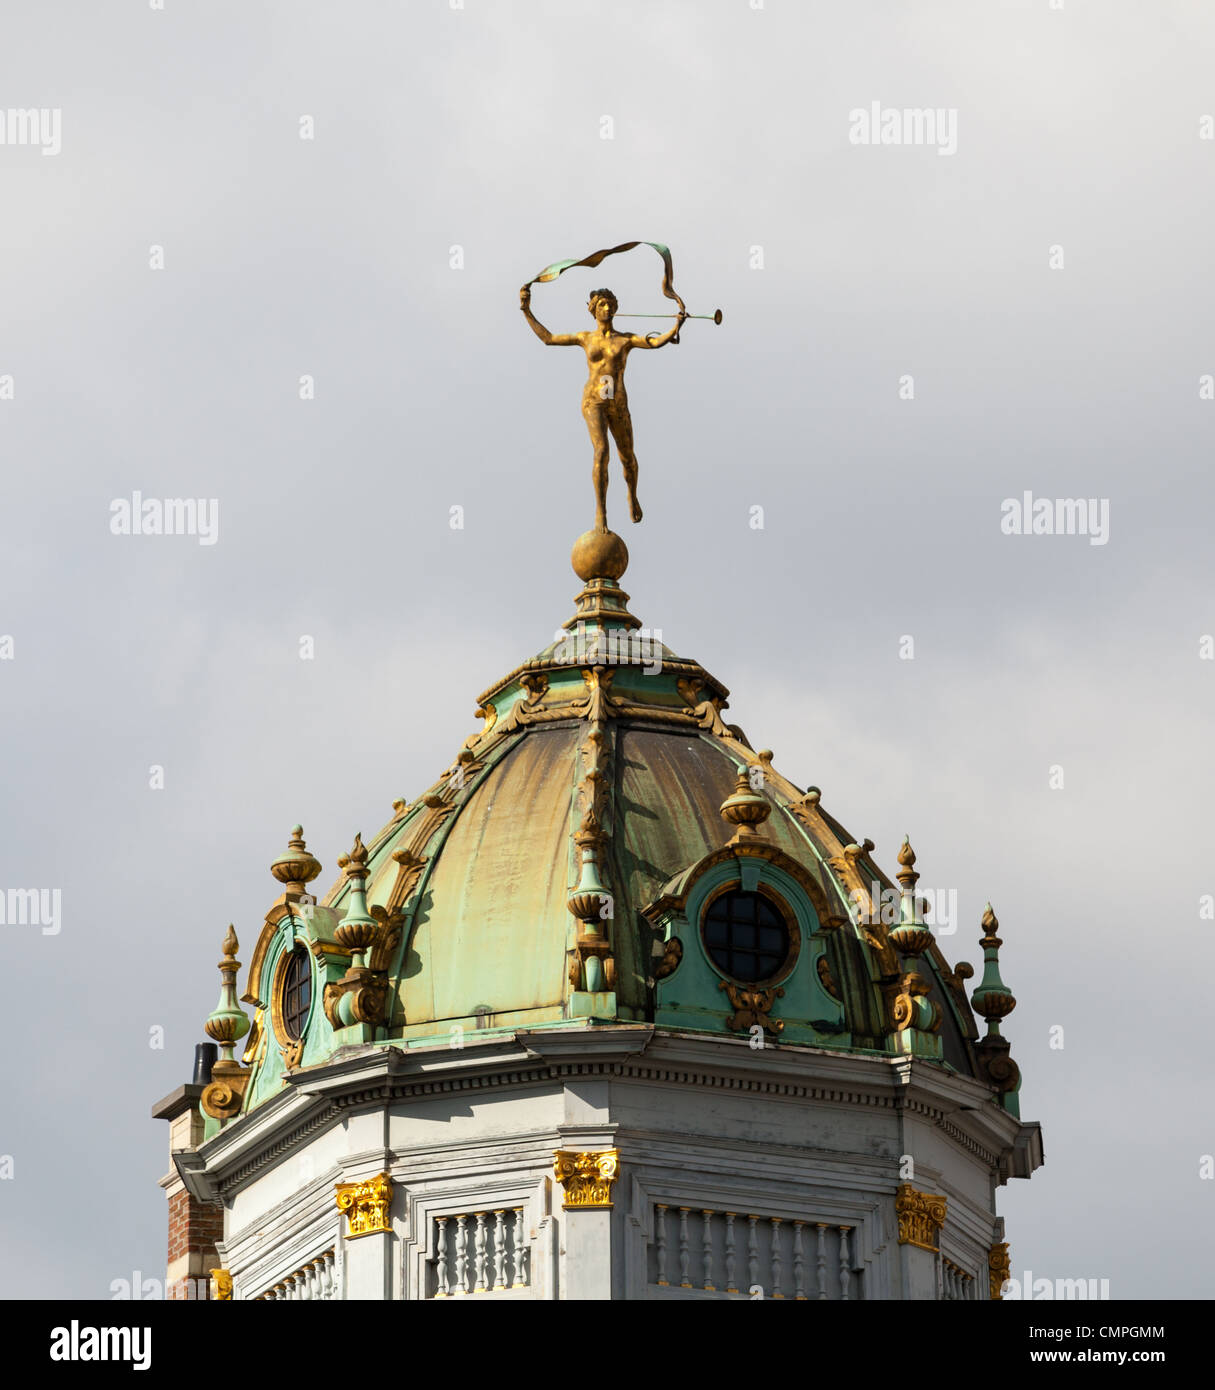 Detalle del techo y estatuas de oro en el techo de la Maison du Roi d Espagne en Grand Place Brussels Foto de stock